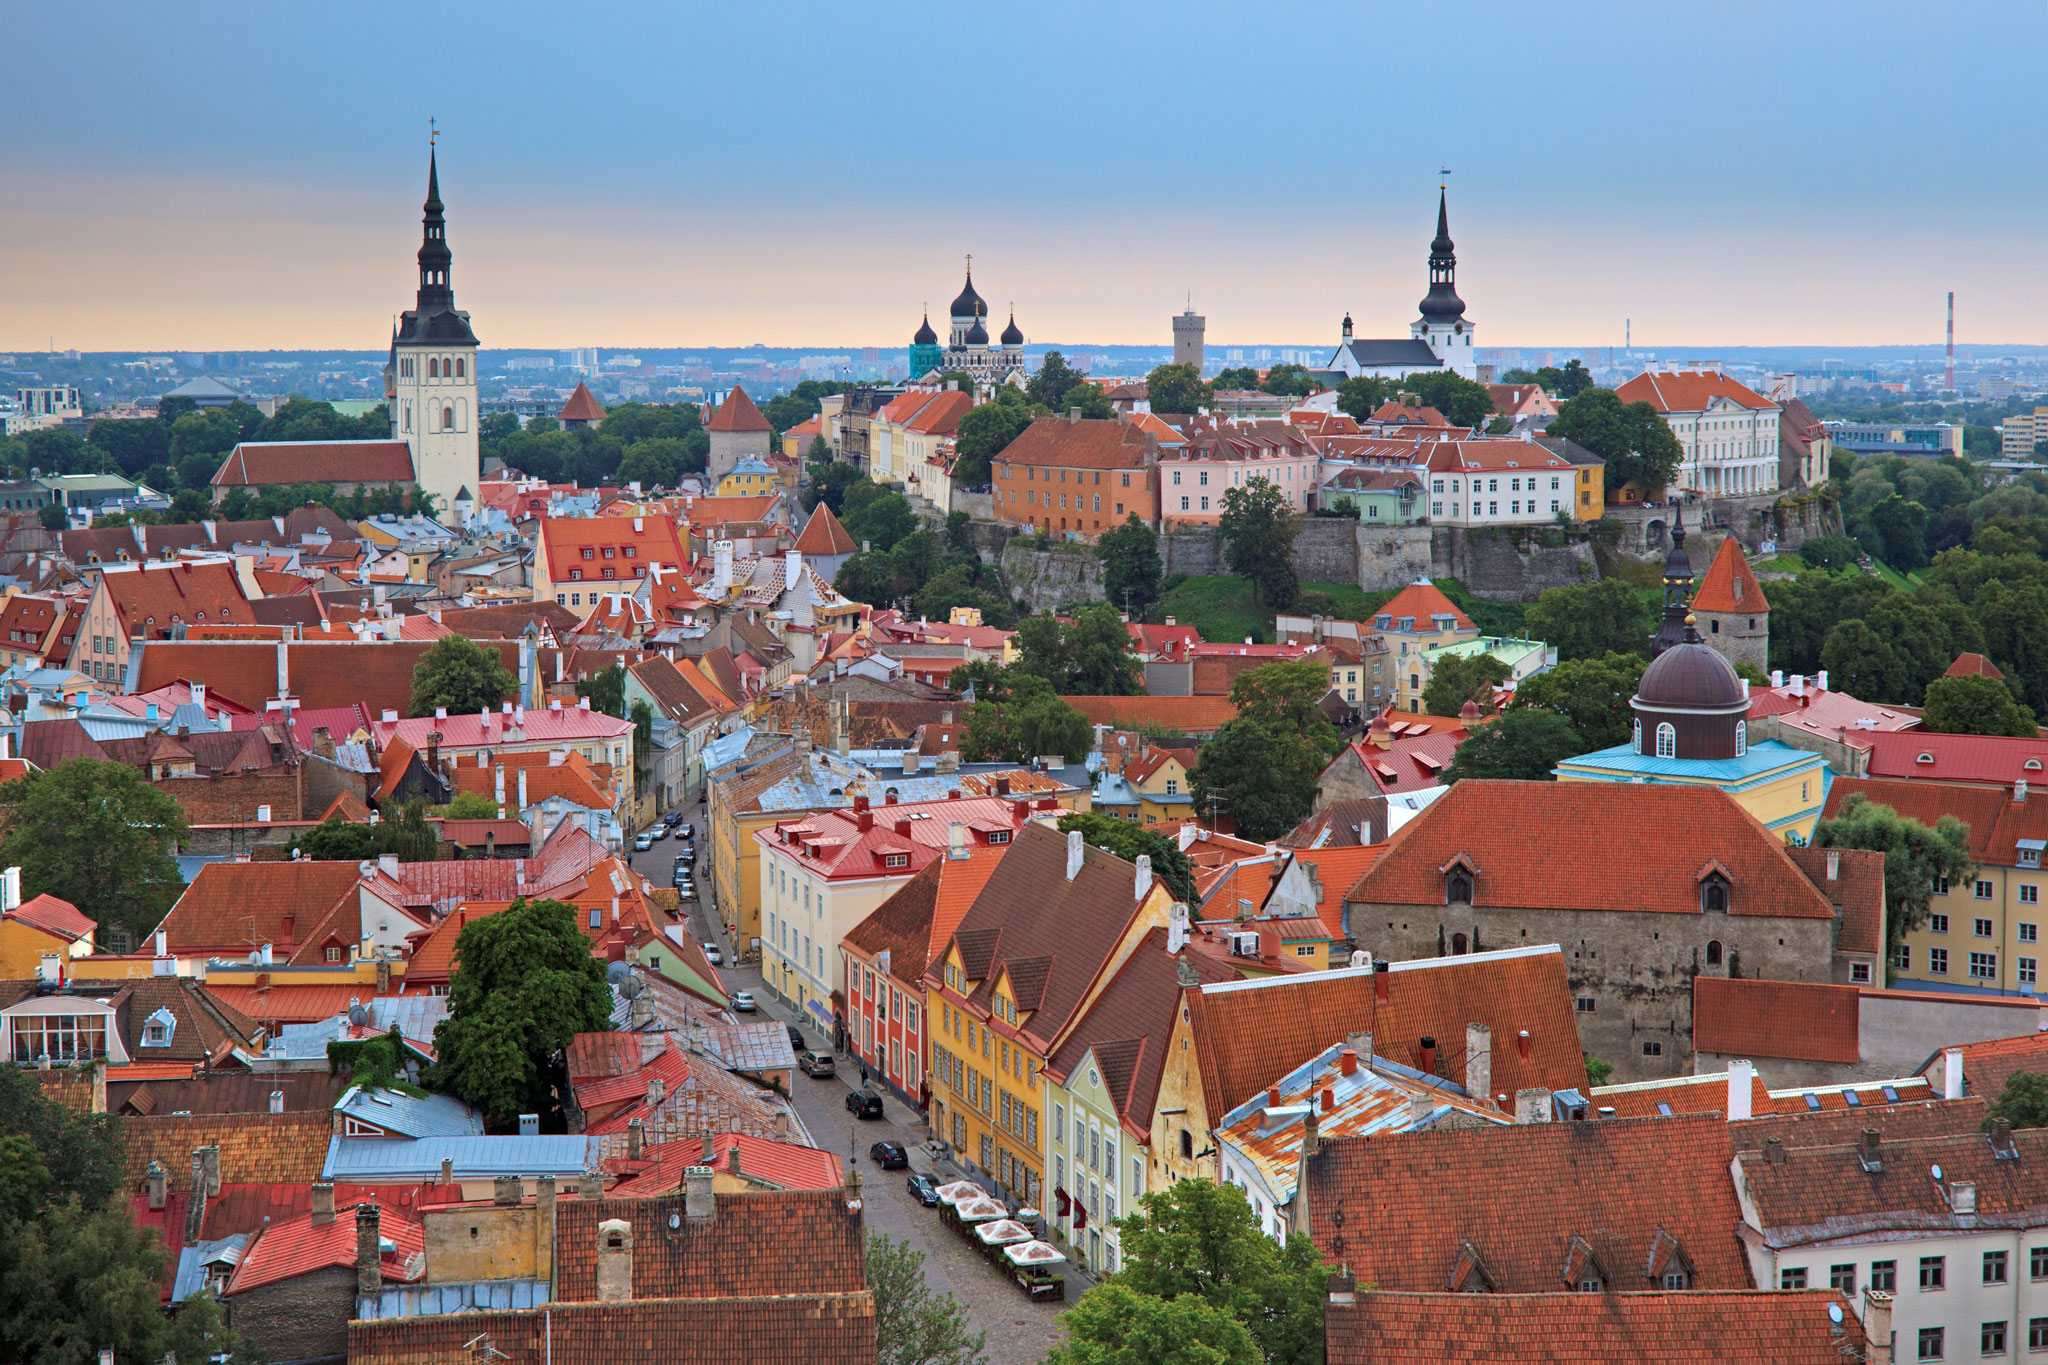 Estonia Travel Guide